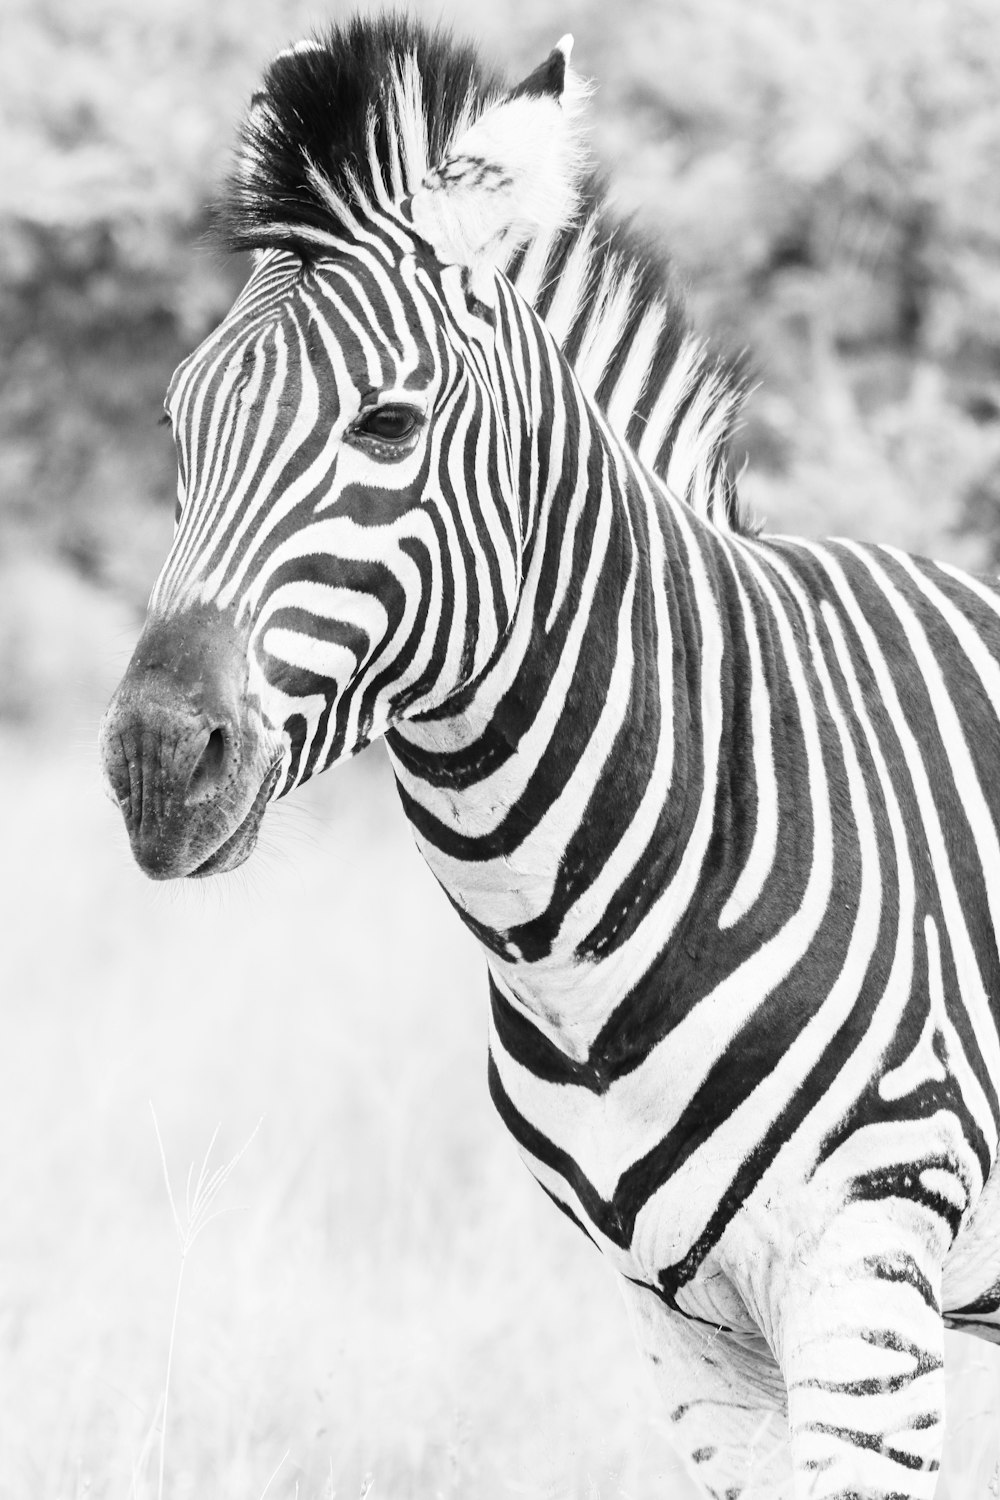 zebra standing on grass field